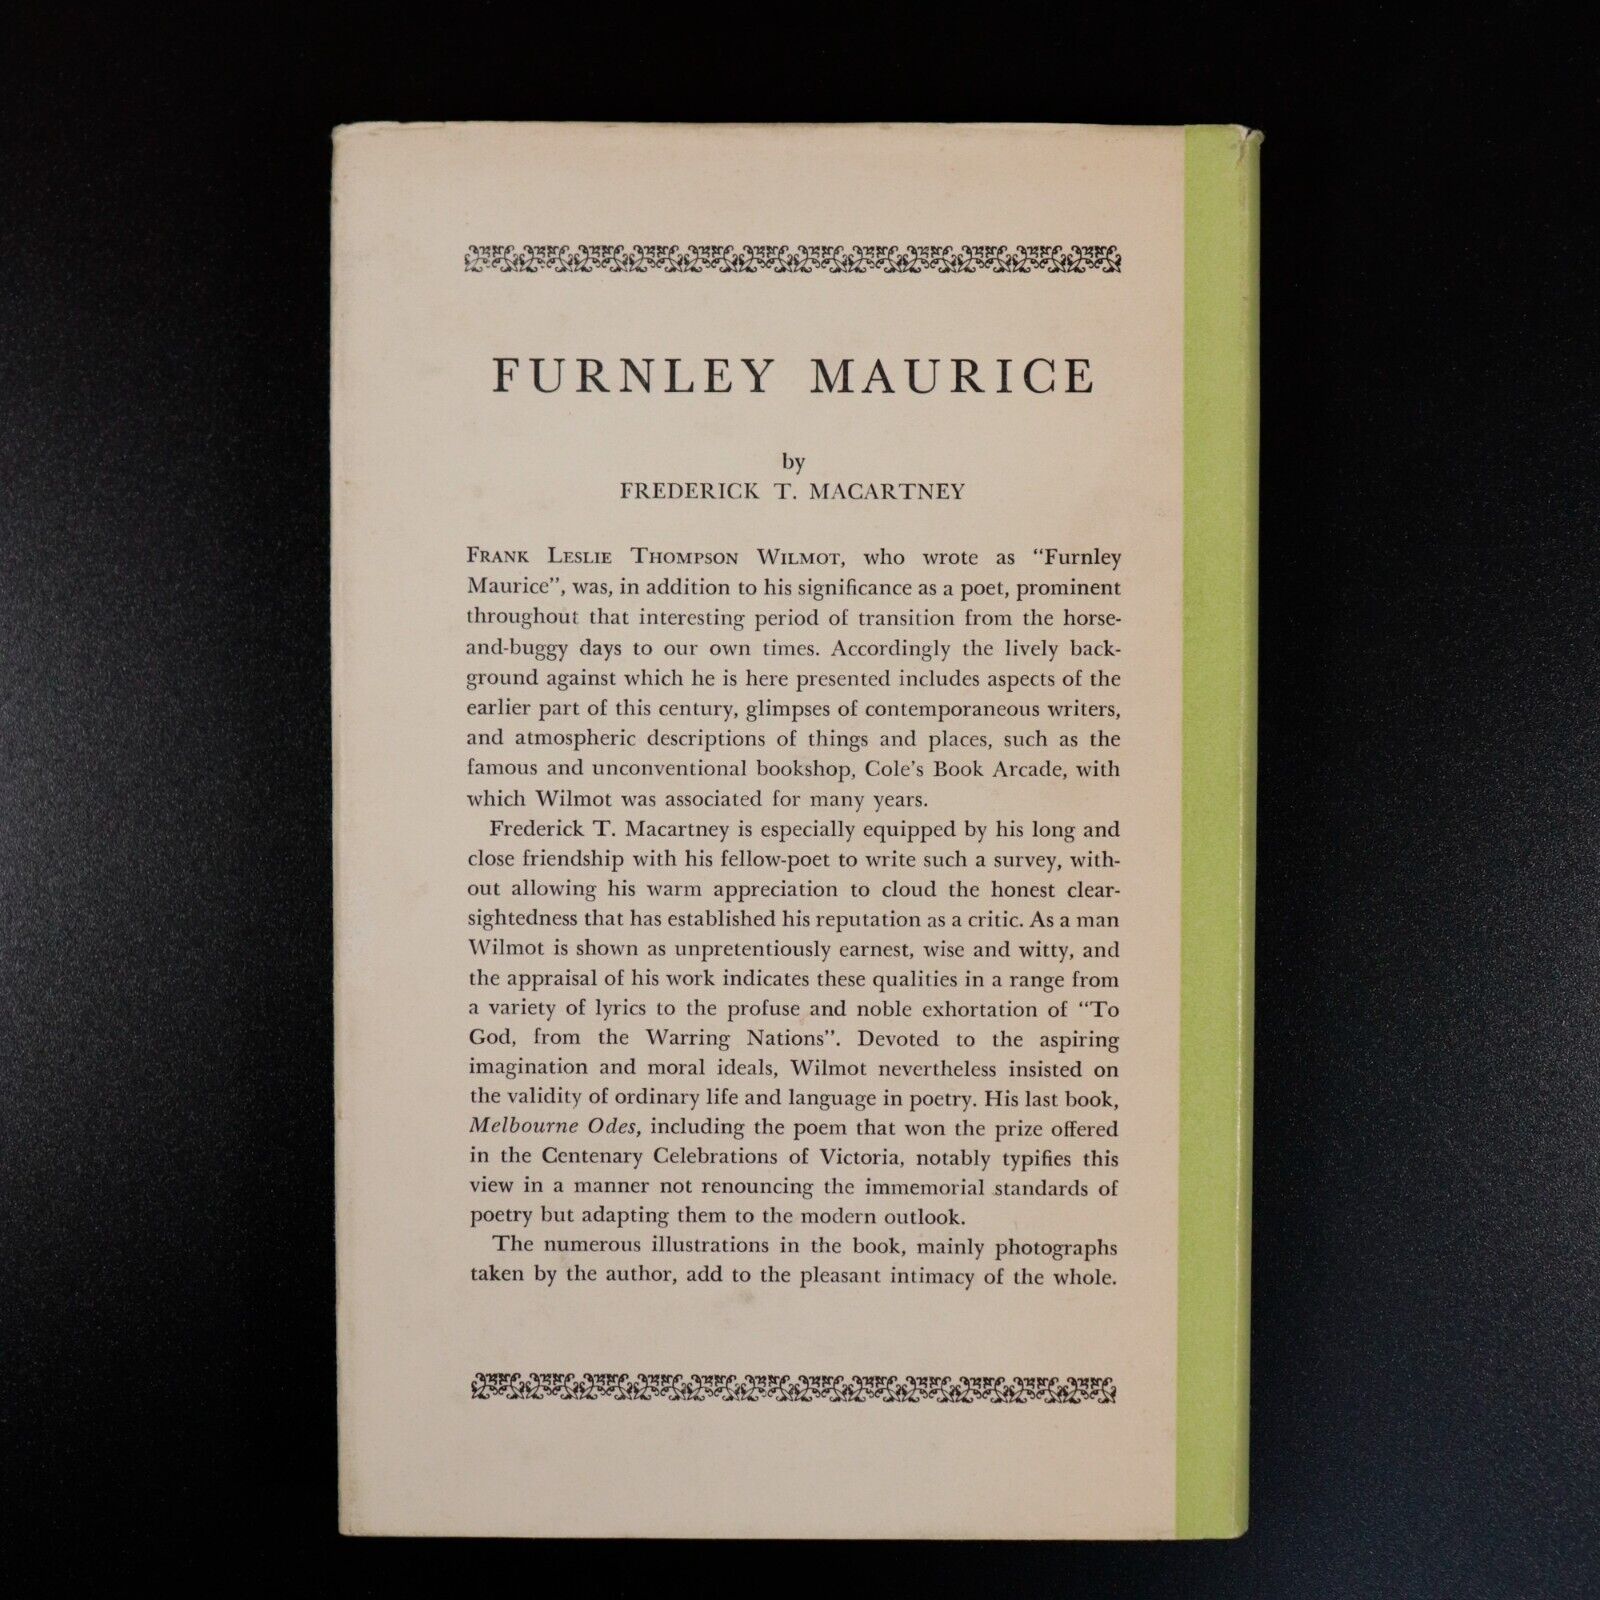 1957 Henry Handel Richardson by Edna Purdie Australian Author Biography Book